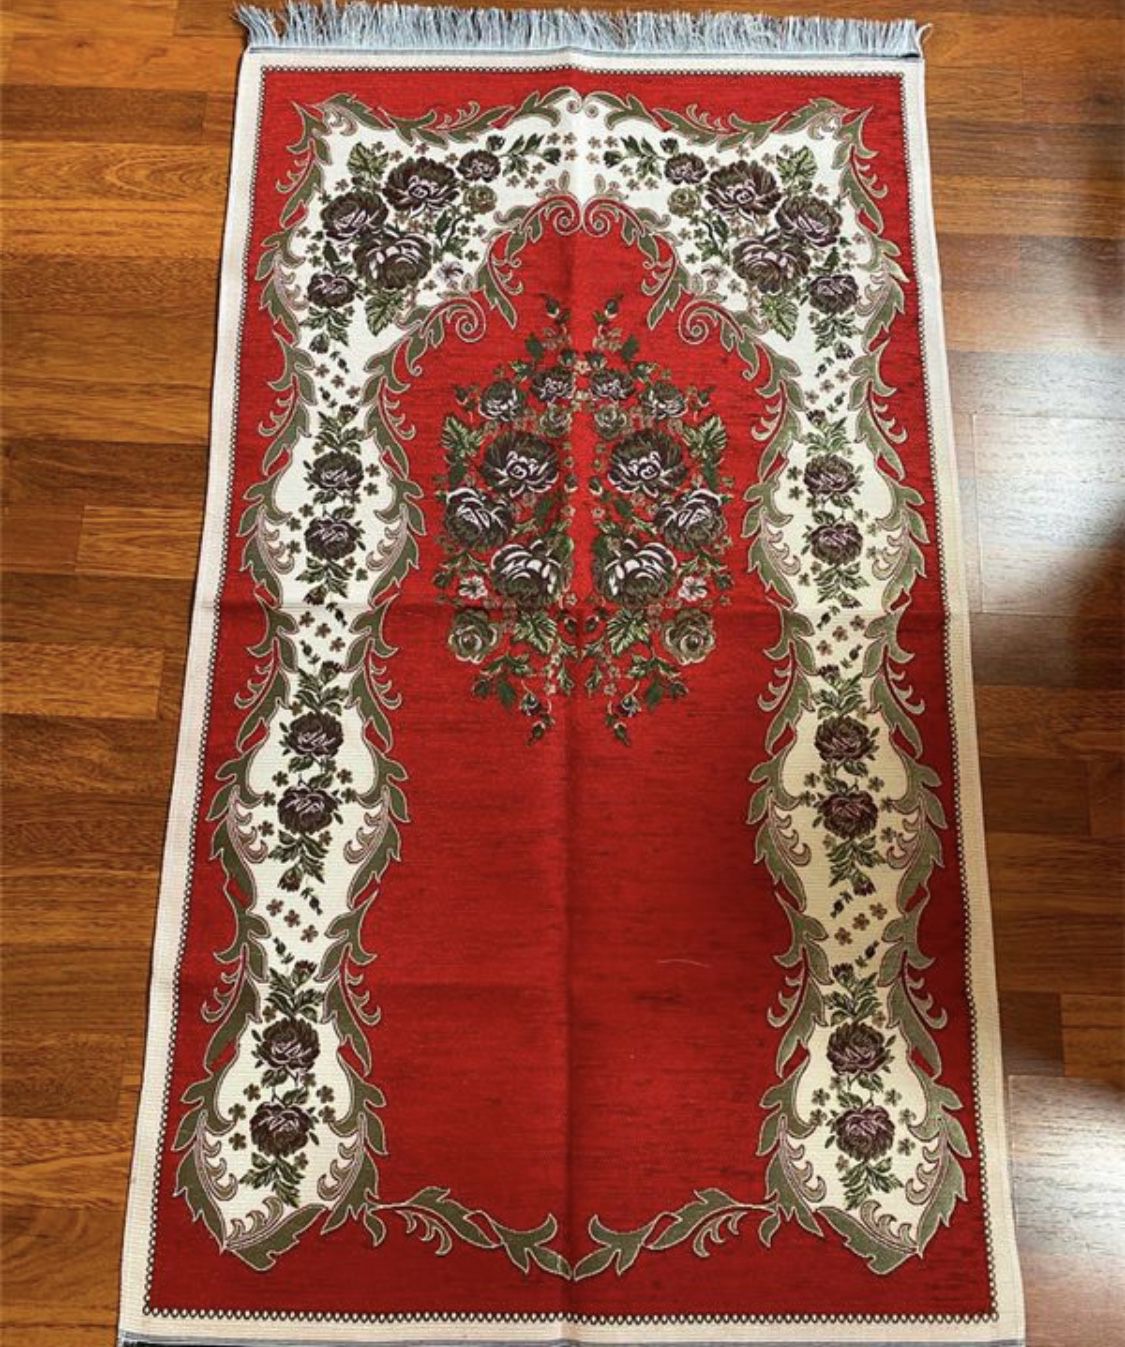 Islamic muslim prayer rug/mat